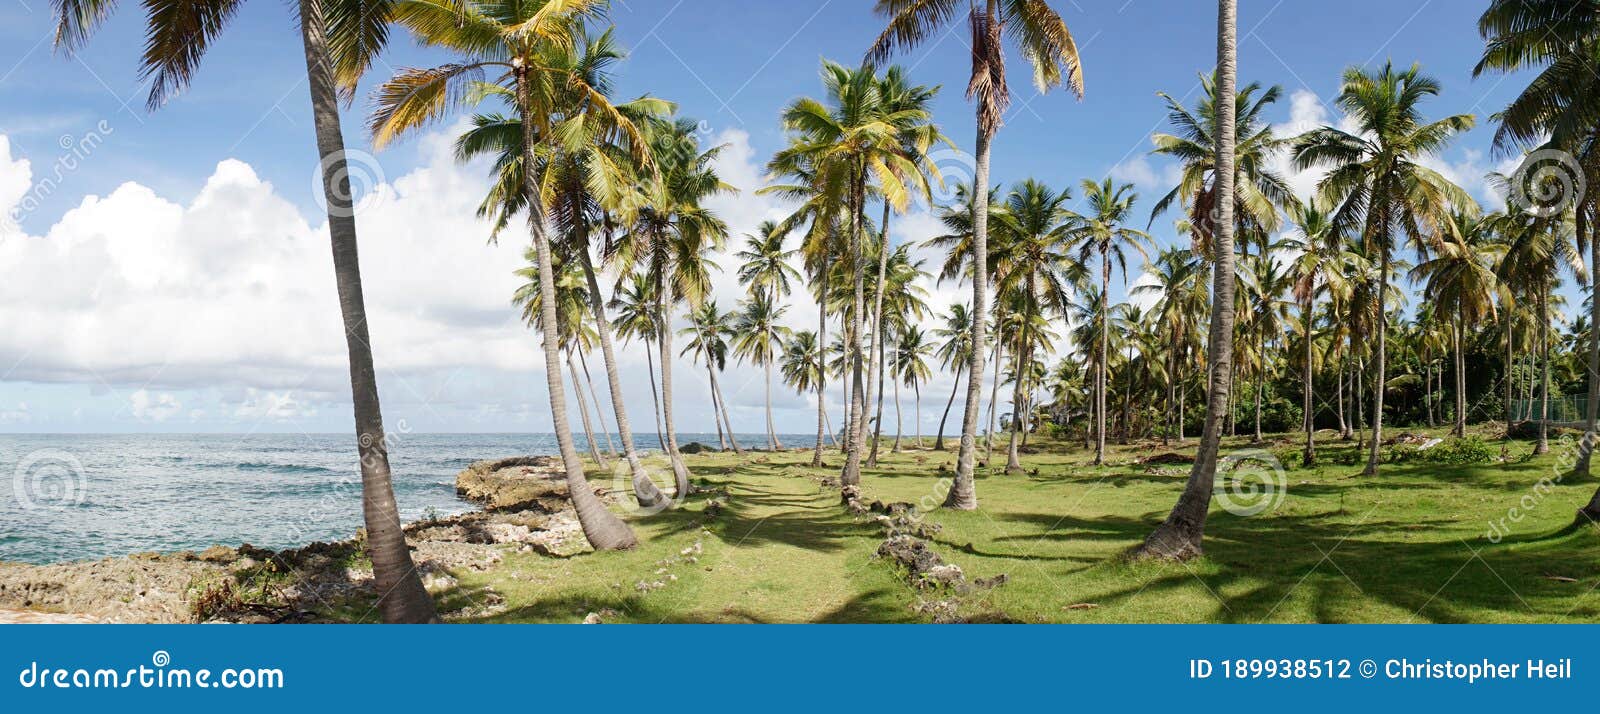 tropical beach and ocean island setting in samana, dominican republic.